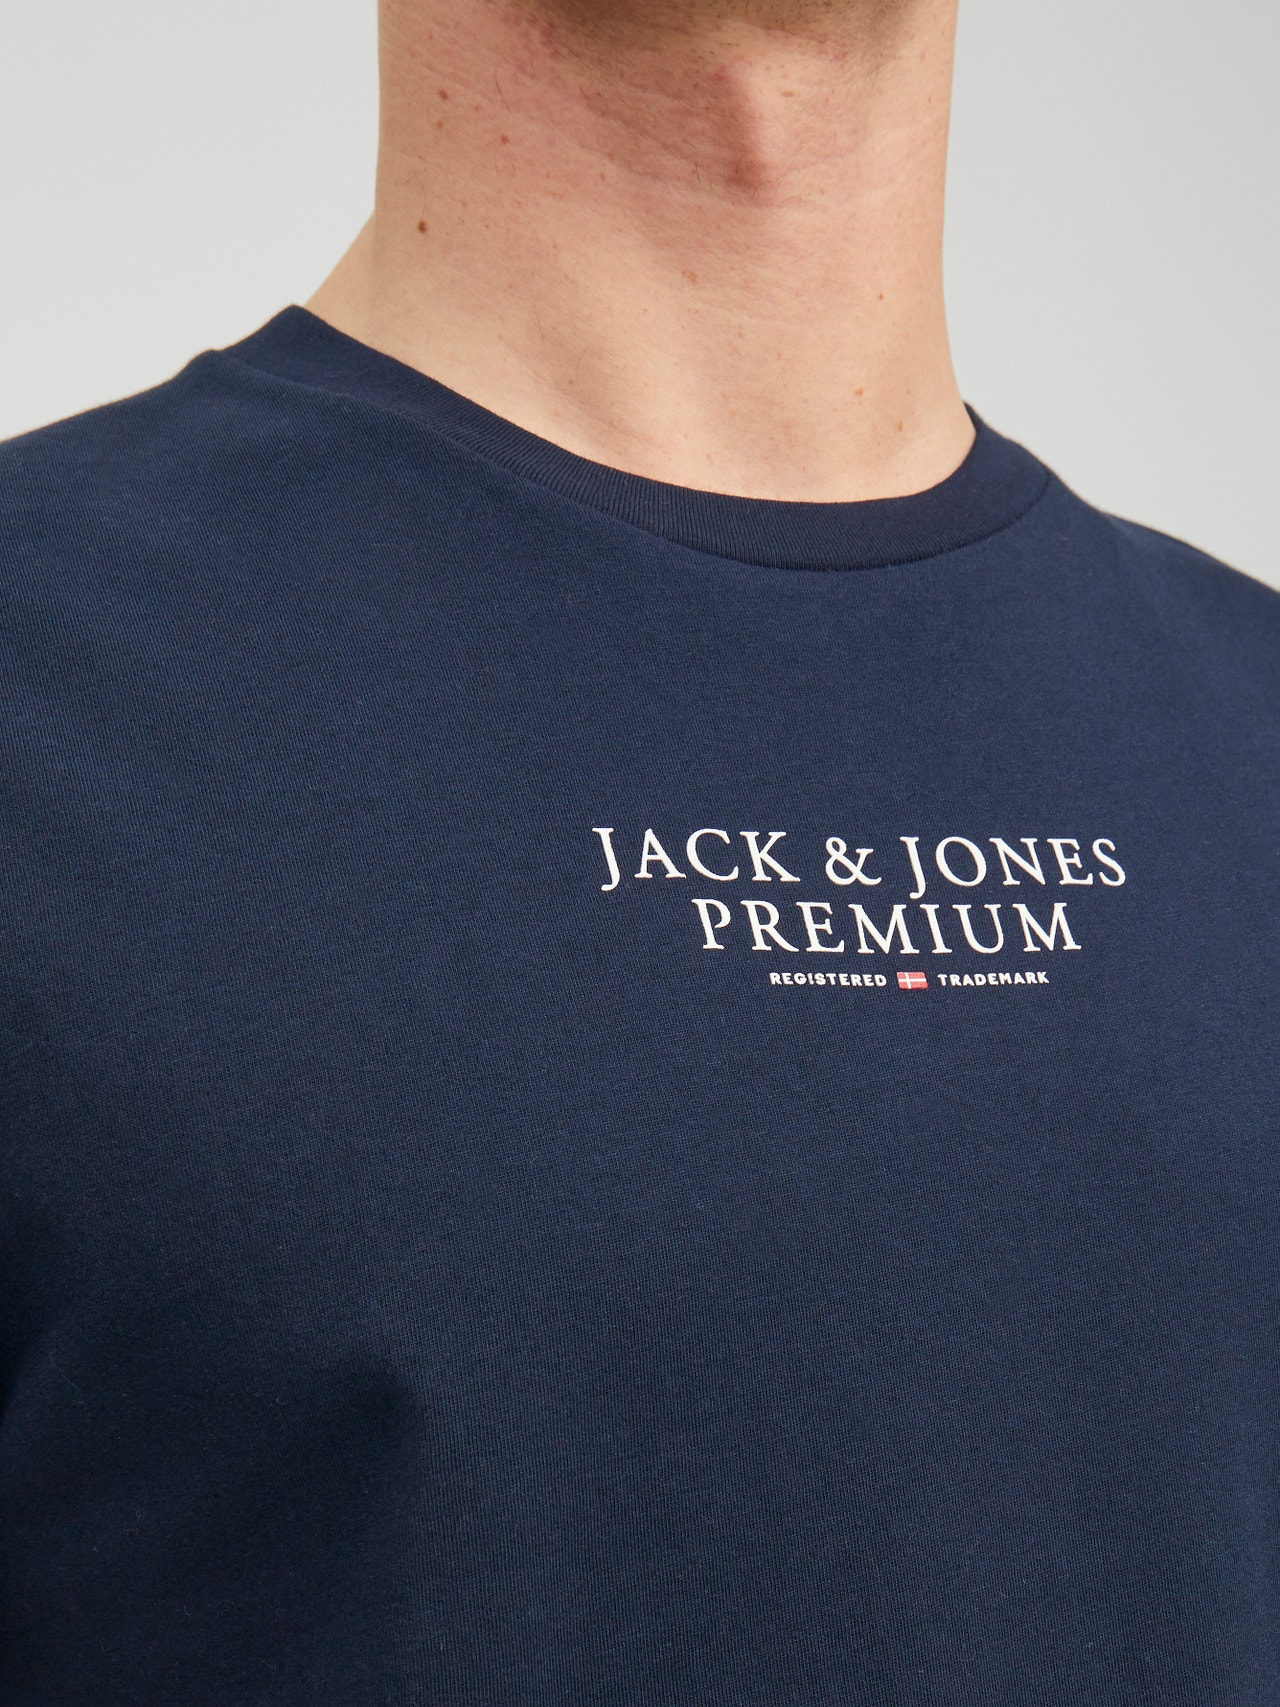 Jack & Jones Logo Rundhals T-shirt -Navy Blazer - 12217167